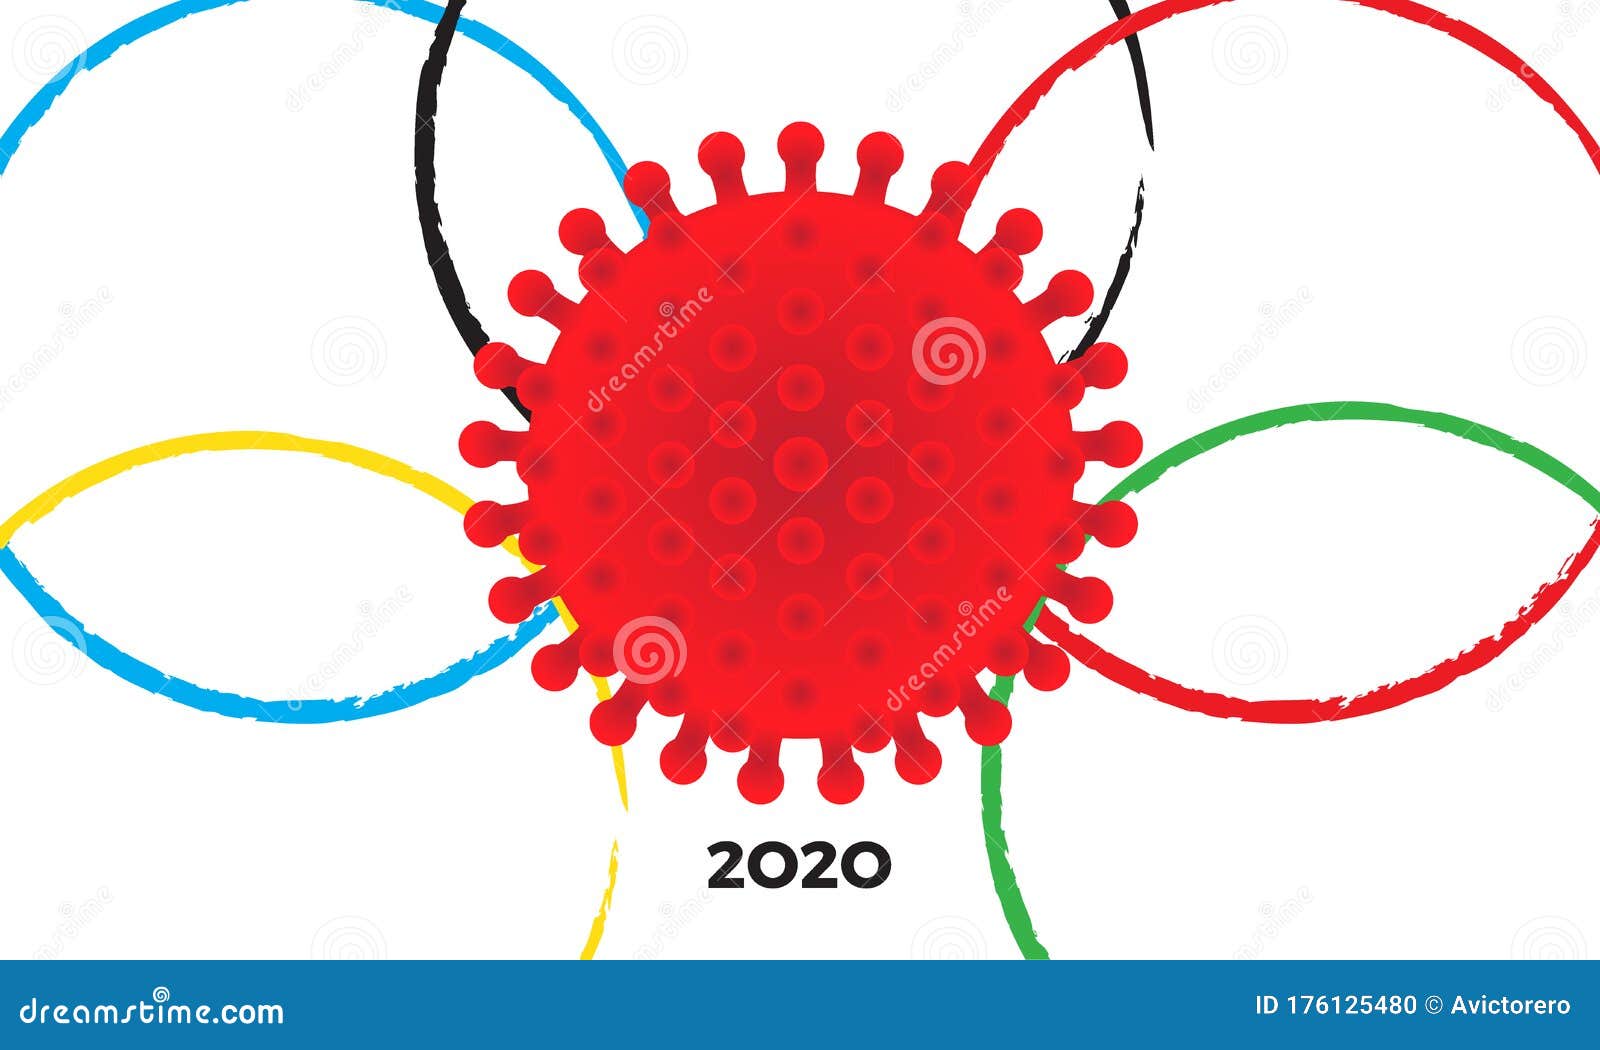 Coronavirus Covid 19 Virus And Olympic Games Logo Stock Vector Illustration Of Care Microbiology 176125480